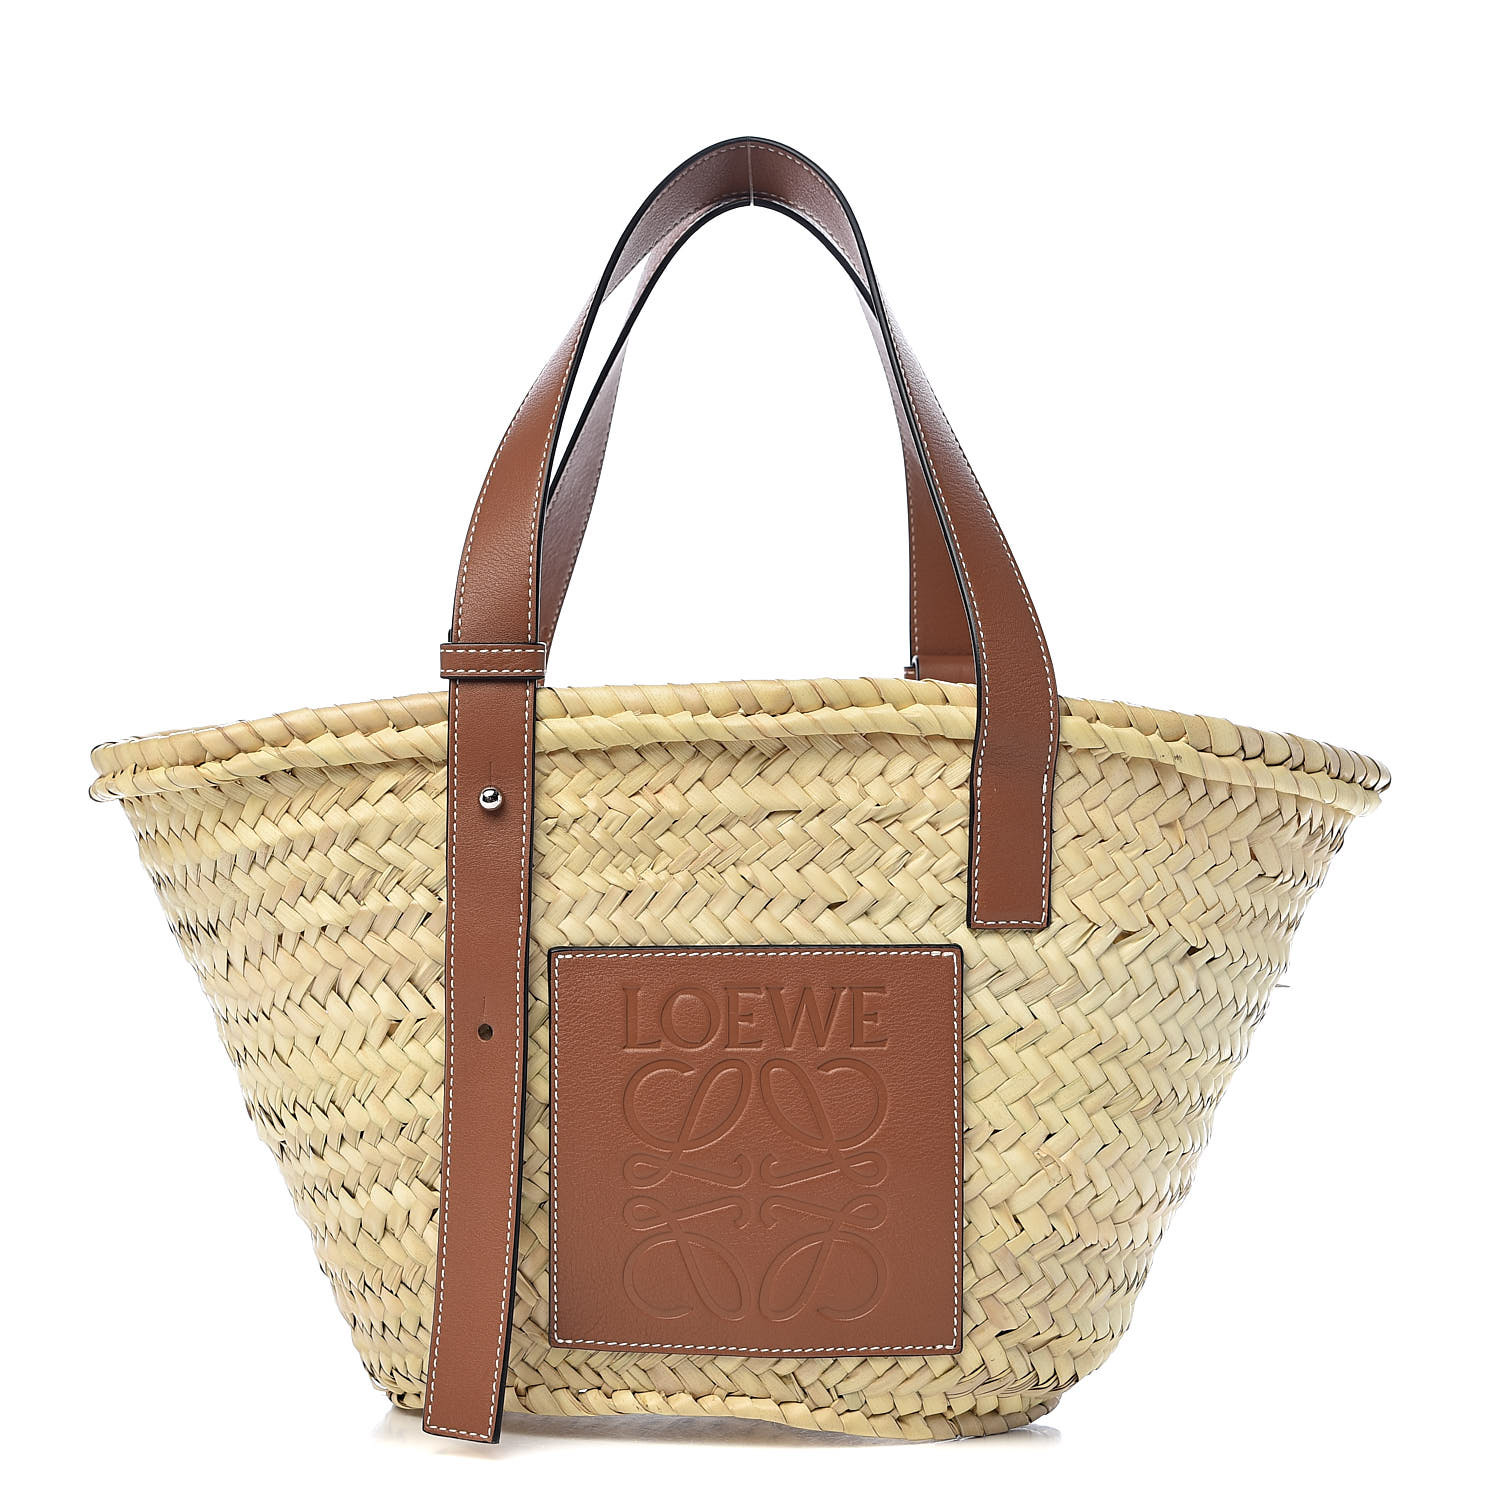 LOEWE Raffia Basket Tote Bag Natural Tan 512248 | FASHIONPHILE